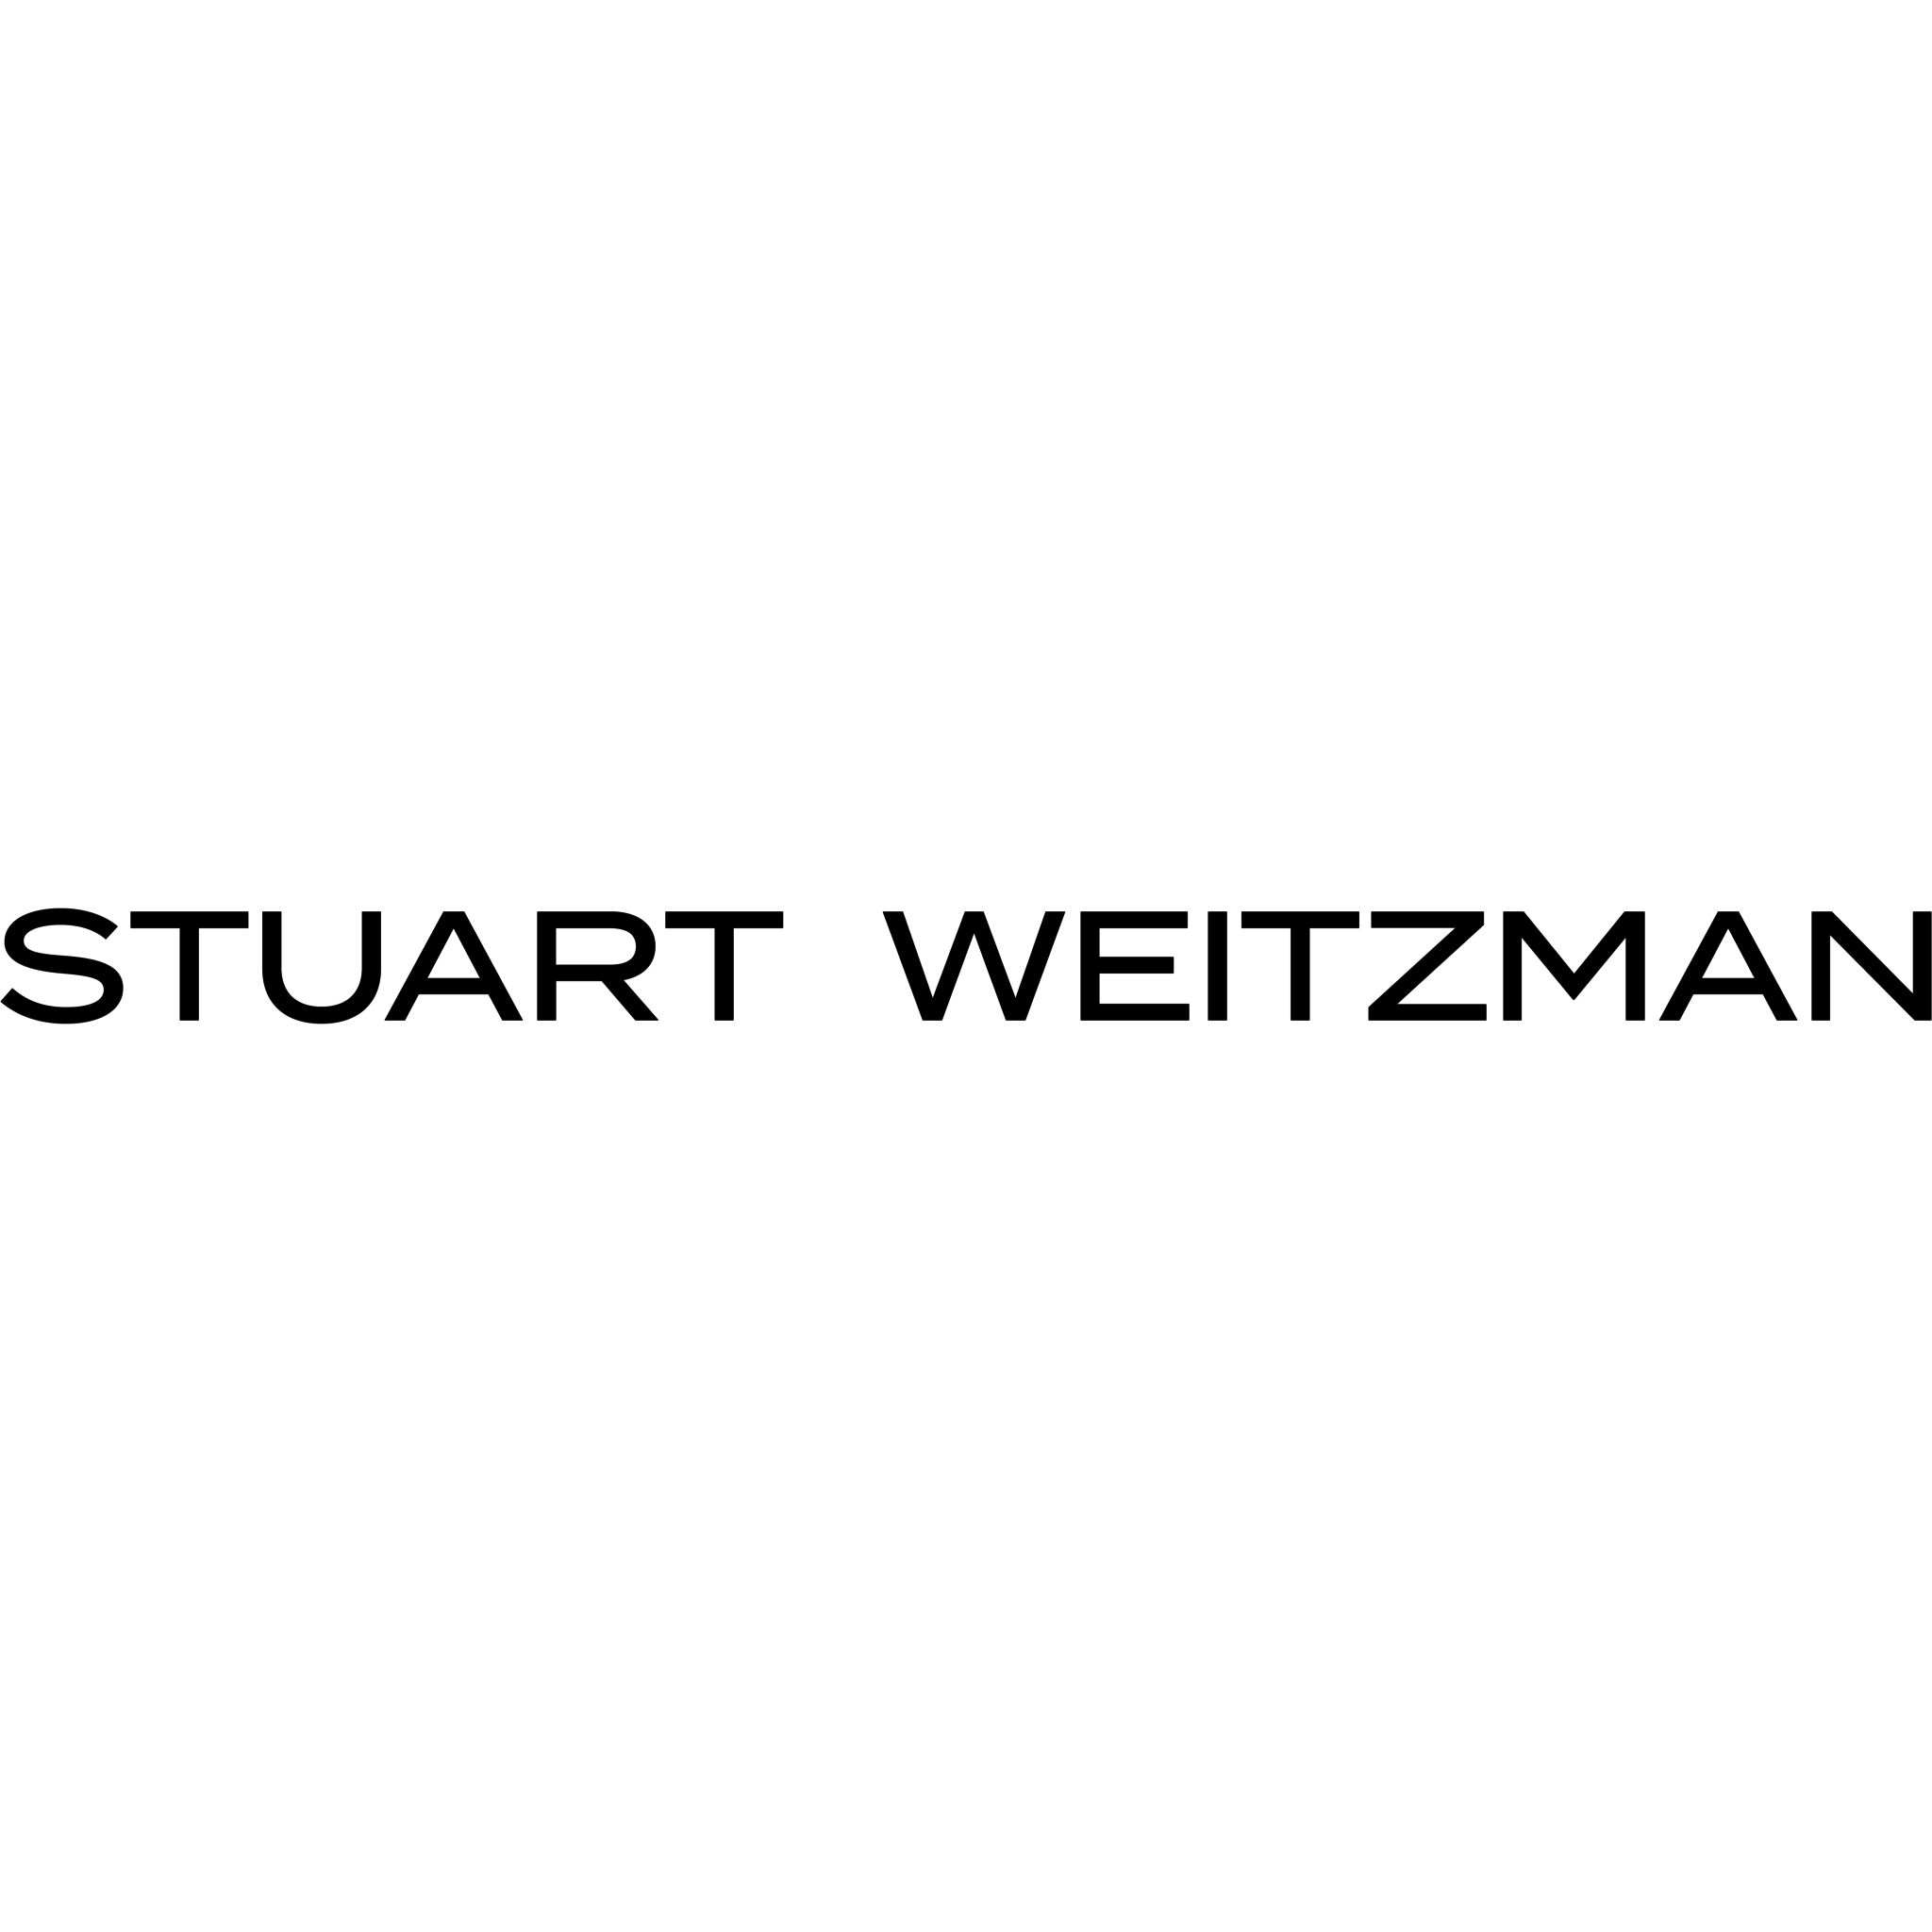 Stuart Weitzman Outlet - Clothing Manufacturers & Wholesalers